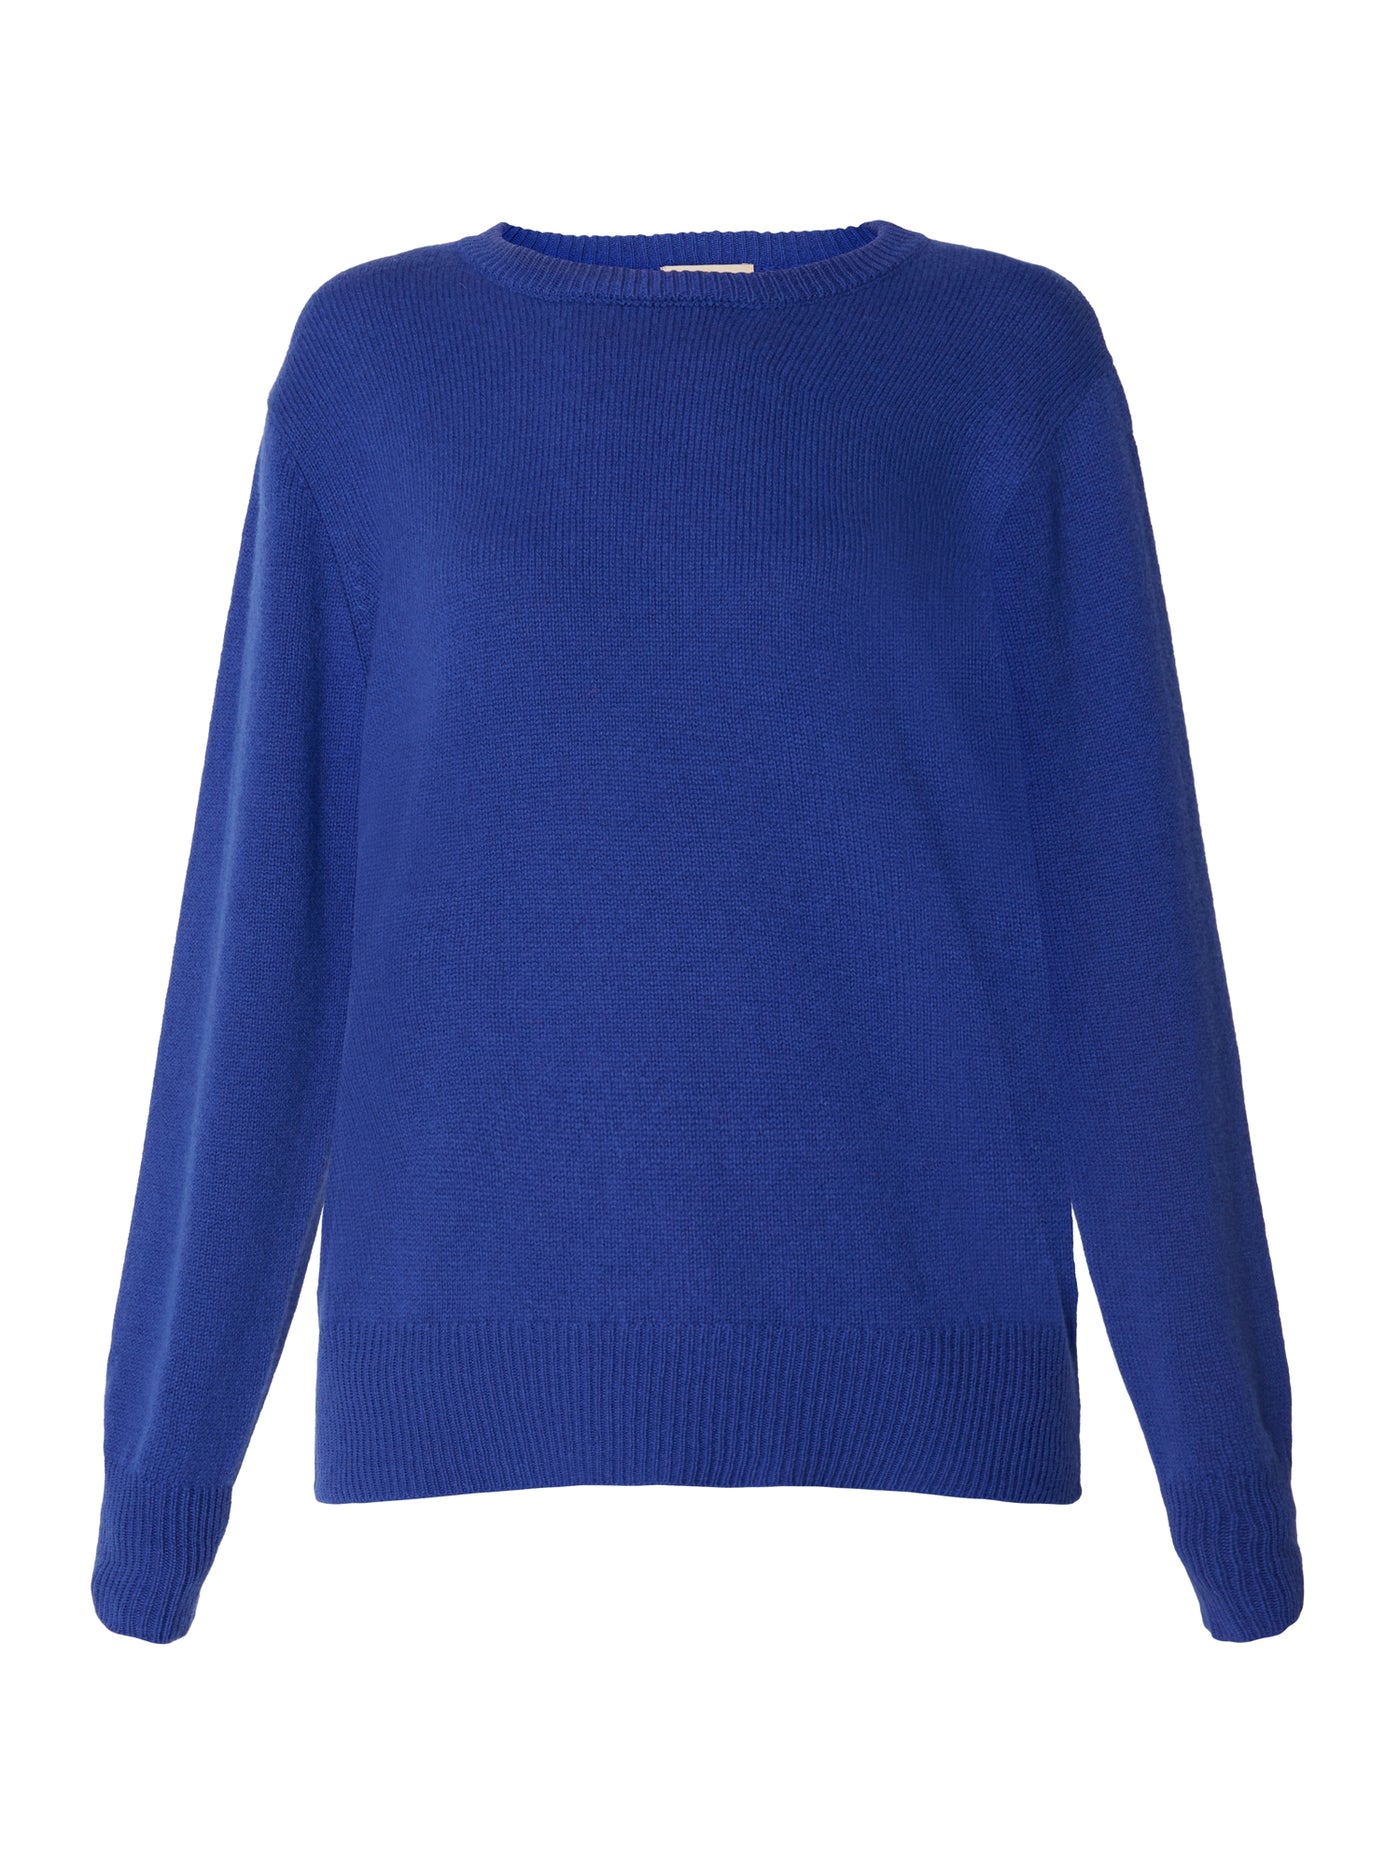 Pullover - Blue